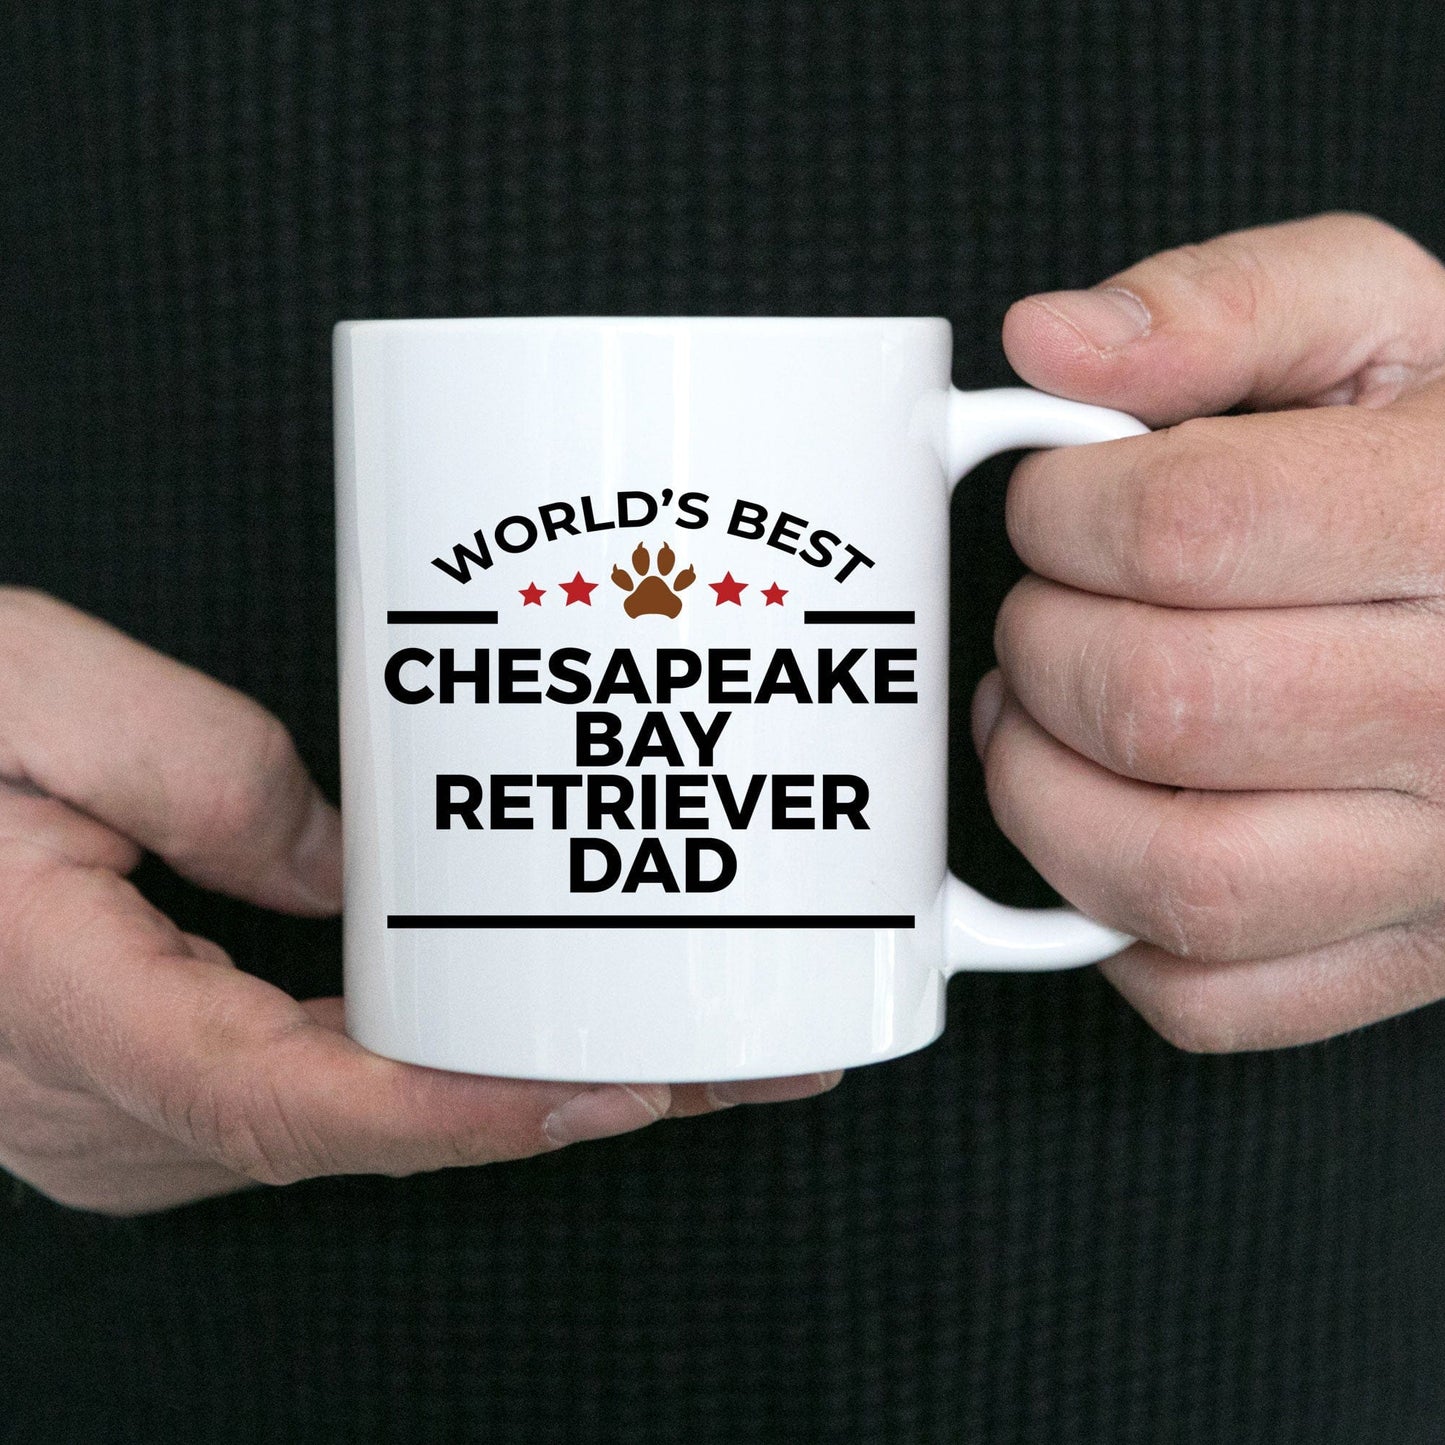 Chesapeake Bay Retriever Dog Dad Coffee Mug